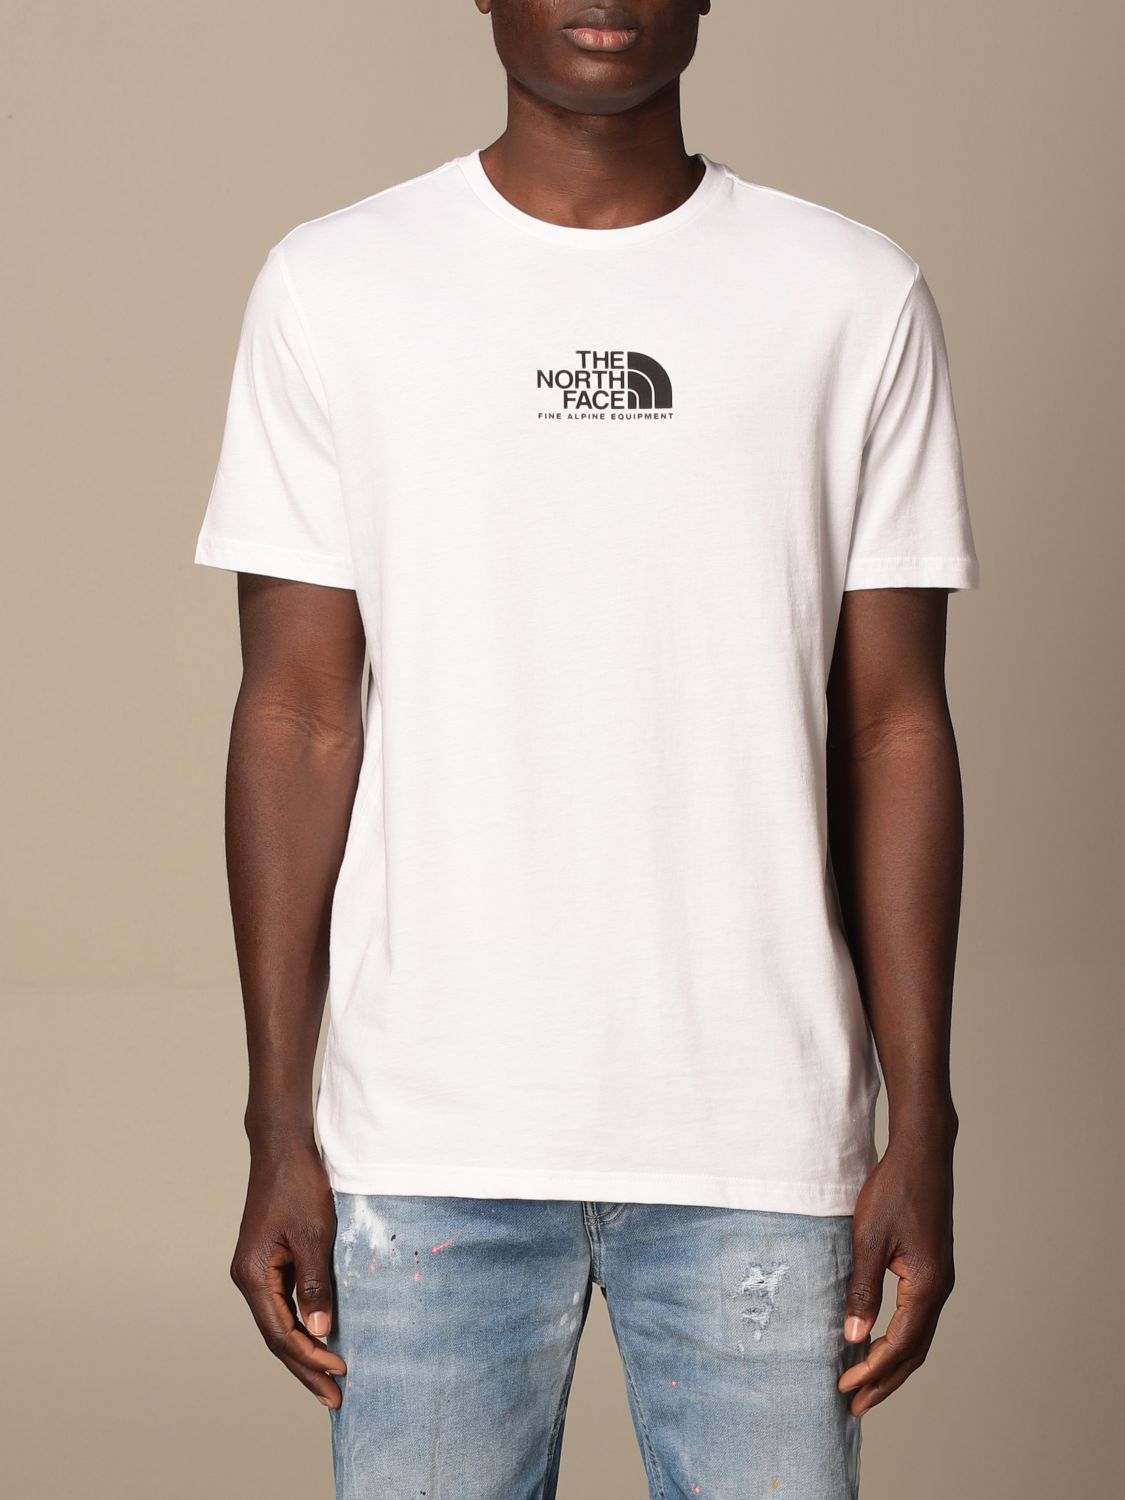 Buy > black north face t shirt mens > in stock